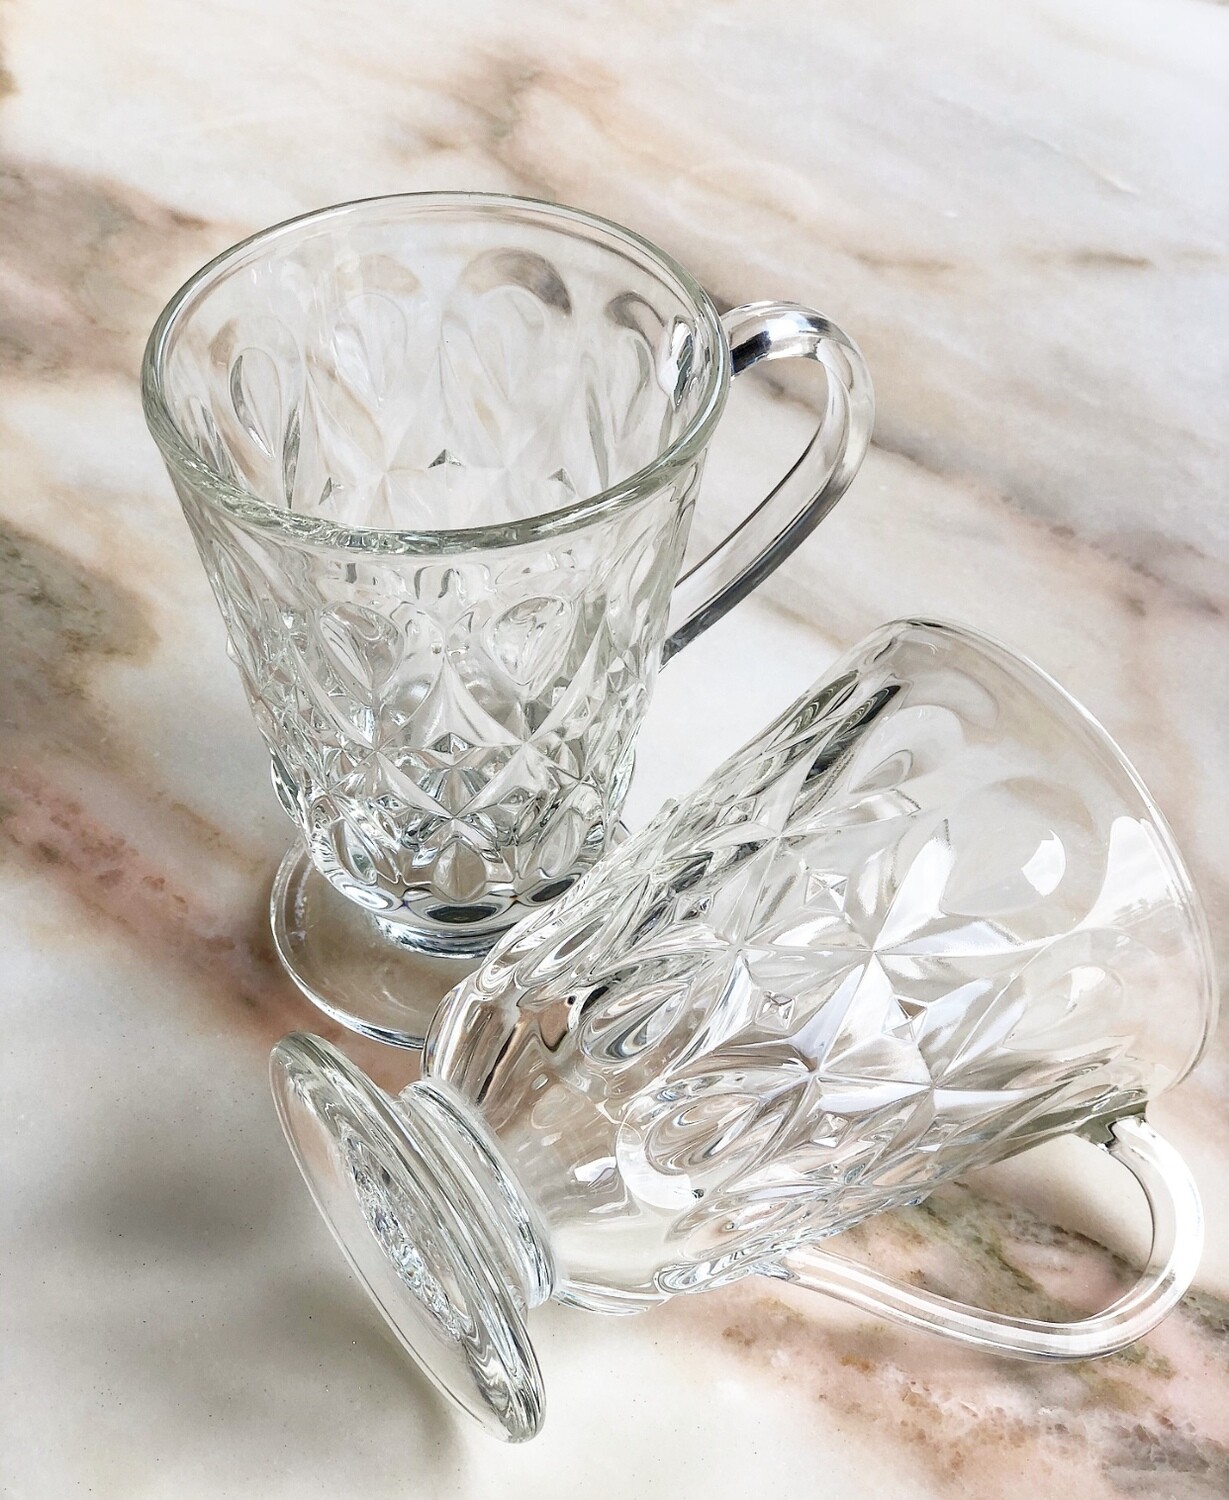 Teardrop Design Hot Chocolate Glass Mug